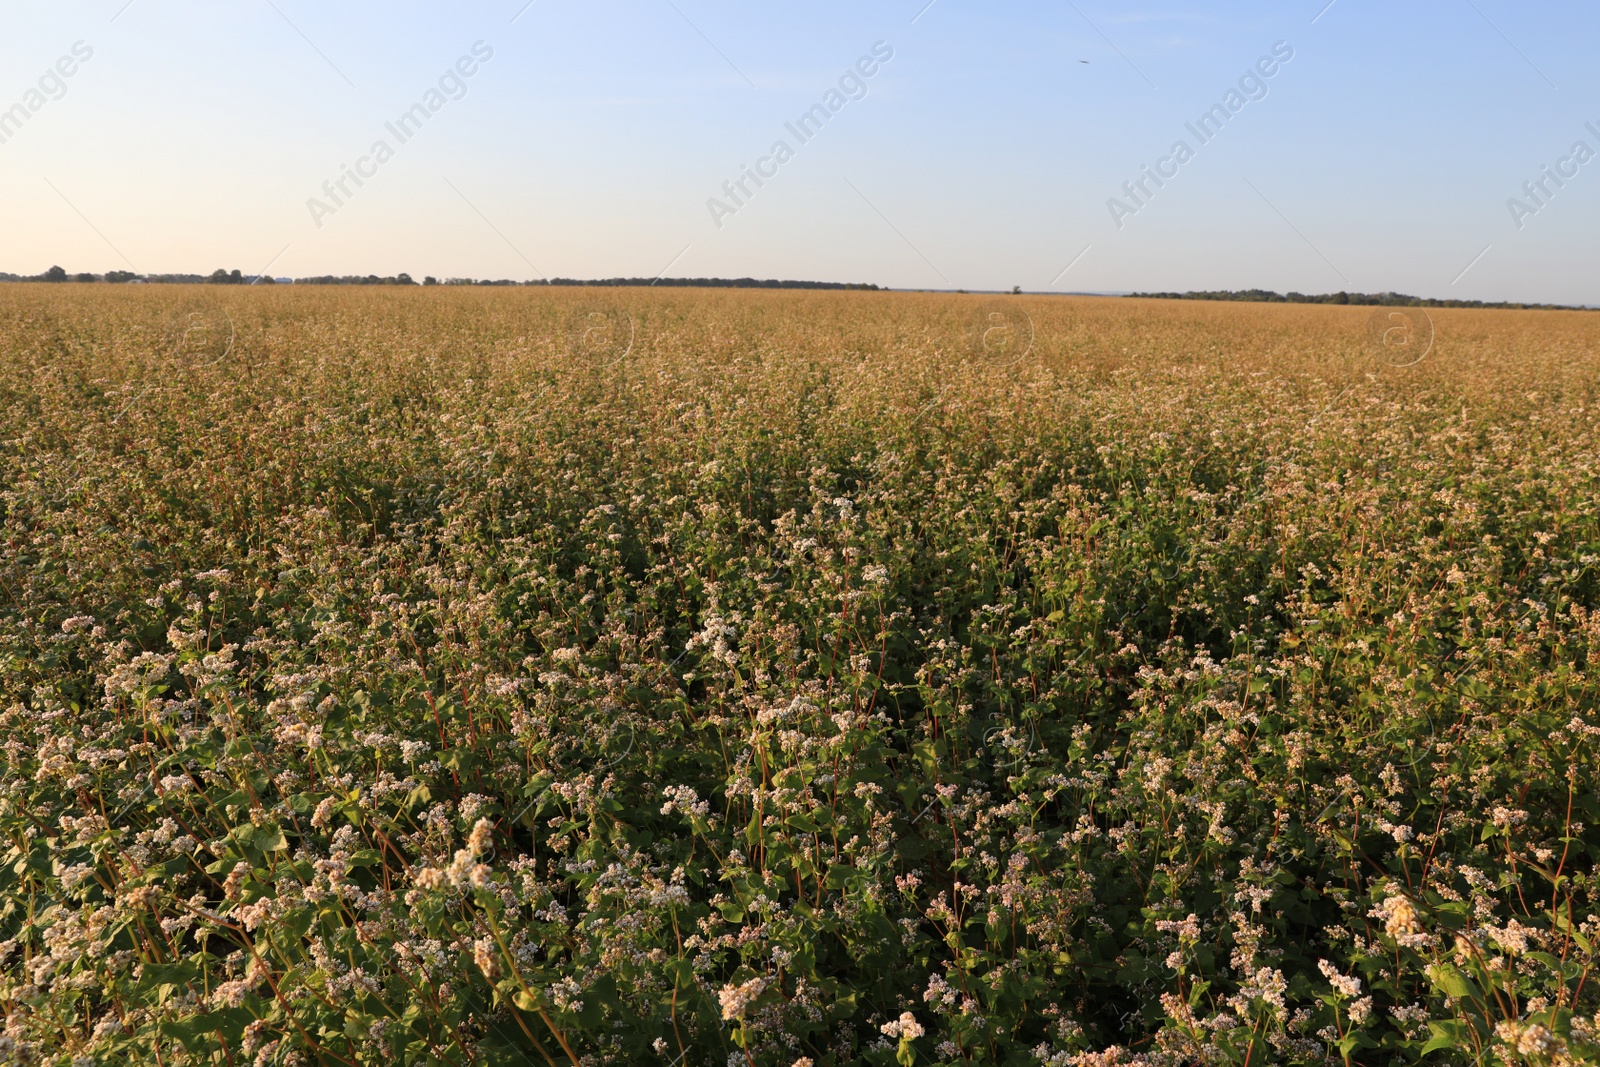 Photo of Beautiful view of buckwheat field under blue sky